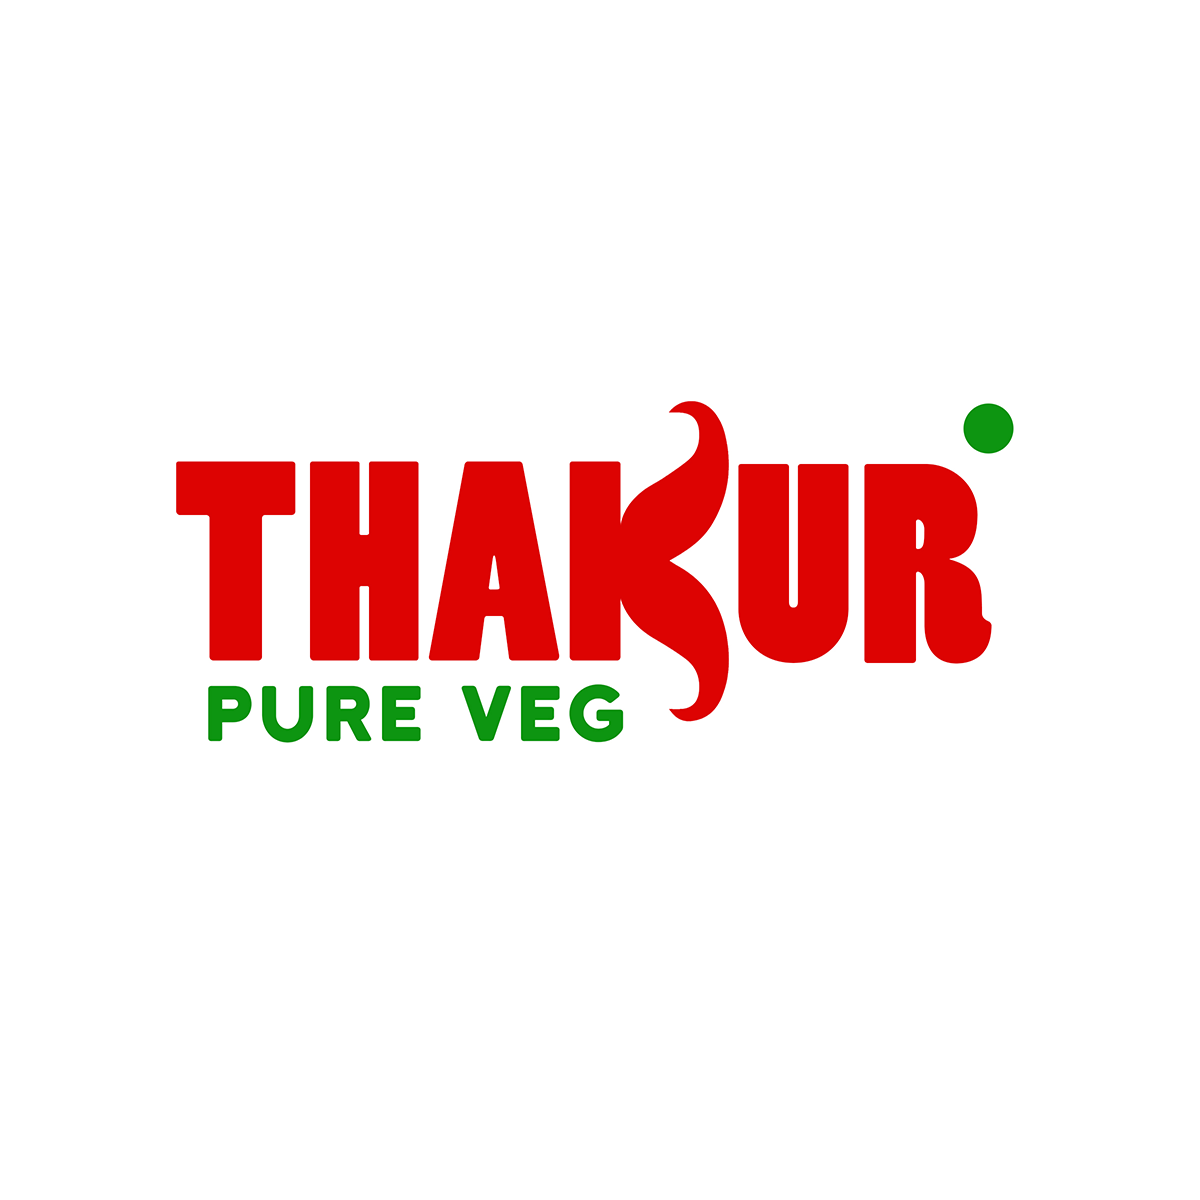 thakur-pure-veg-restaurant-logo-mumbai-india-by arabella-design.png